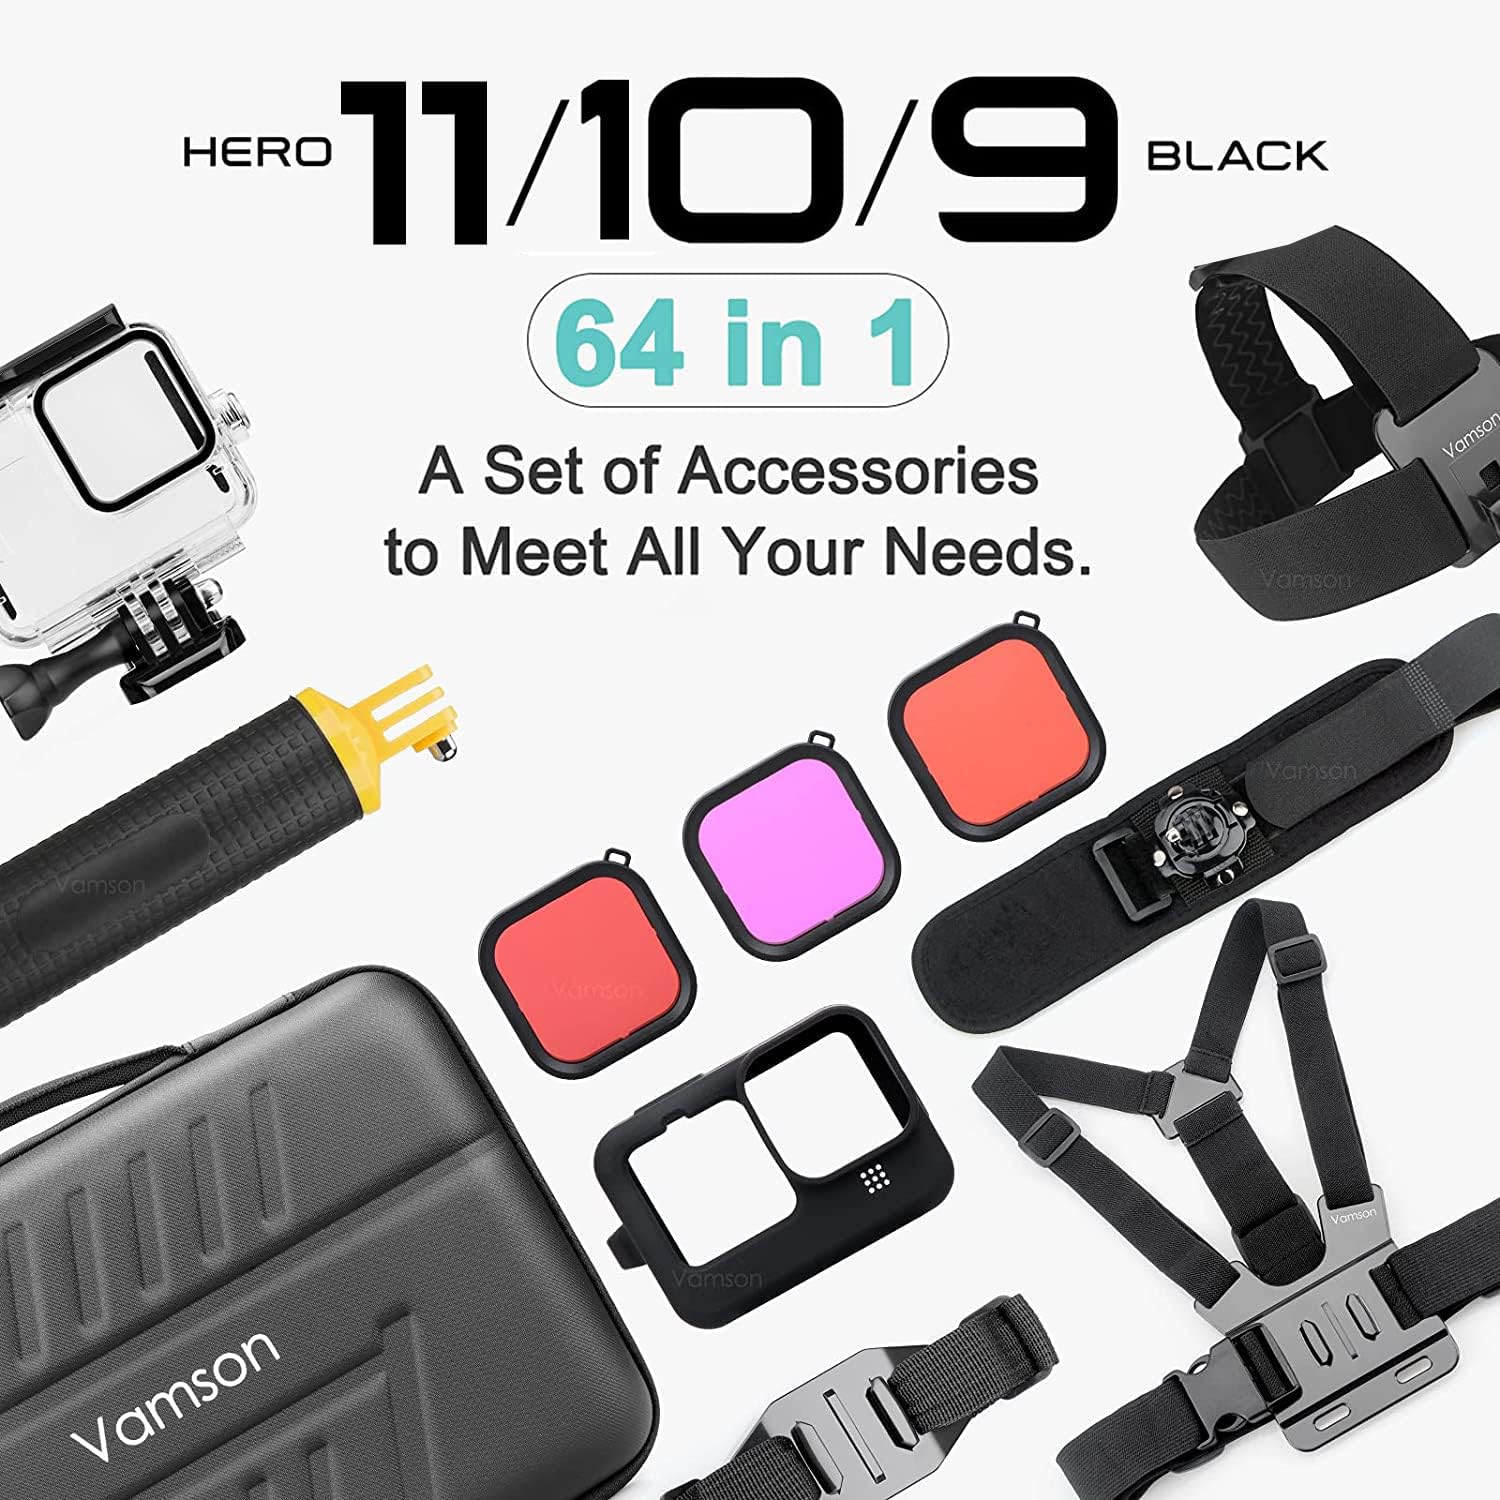 Vamson Accessories Kit for GoPro Hero 11 10 9 Black